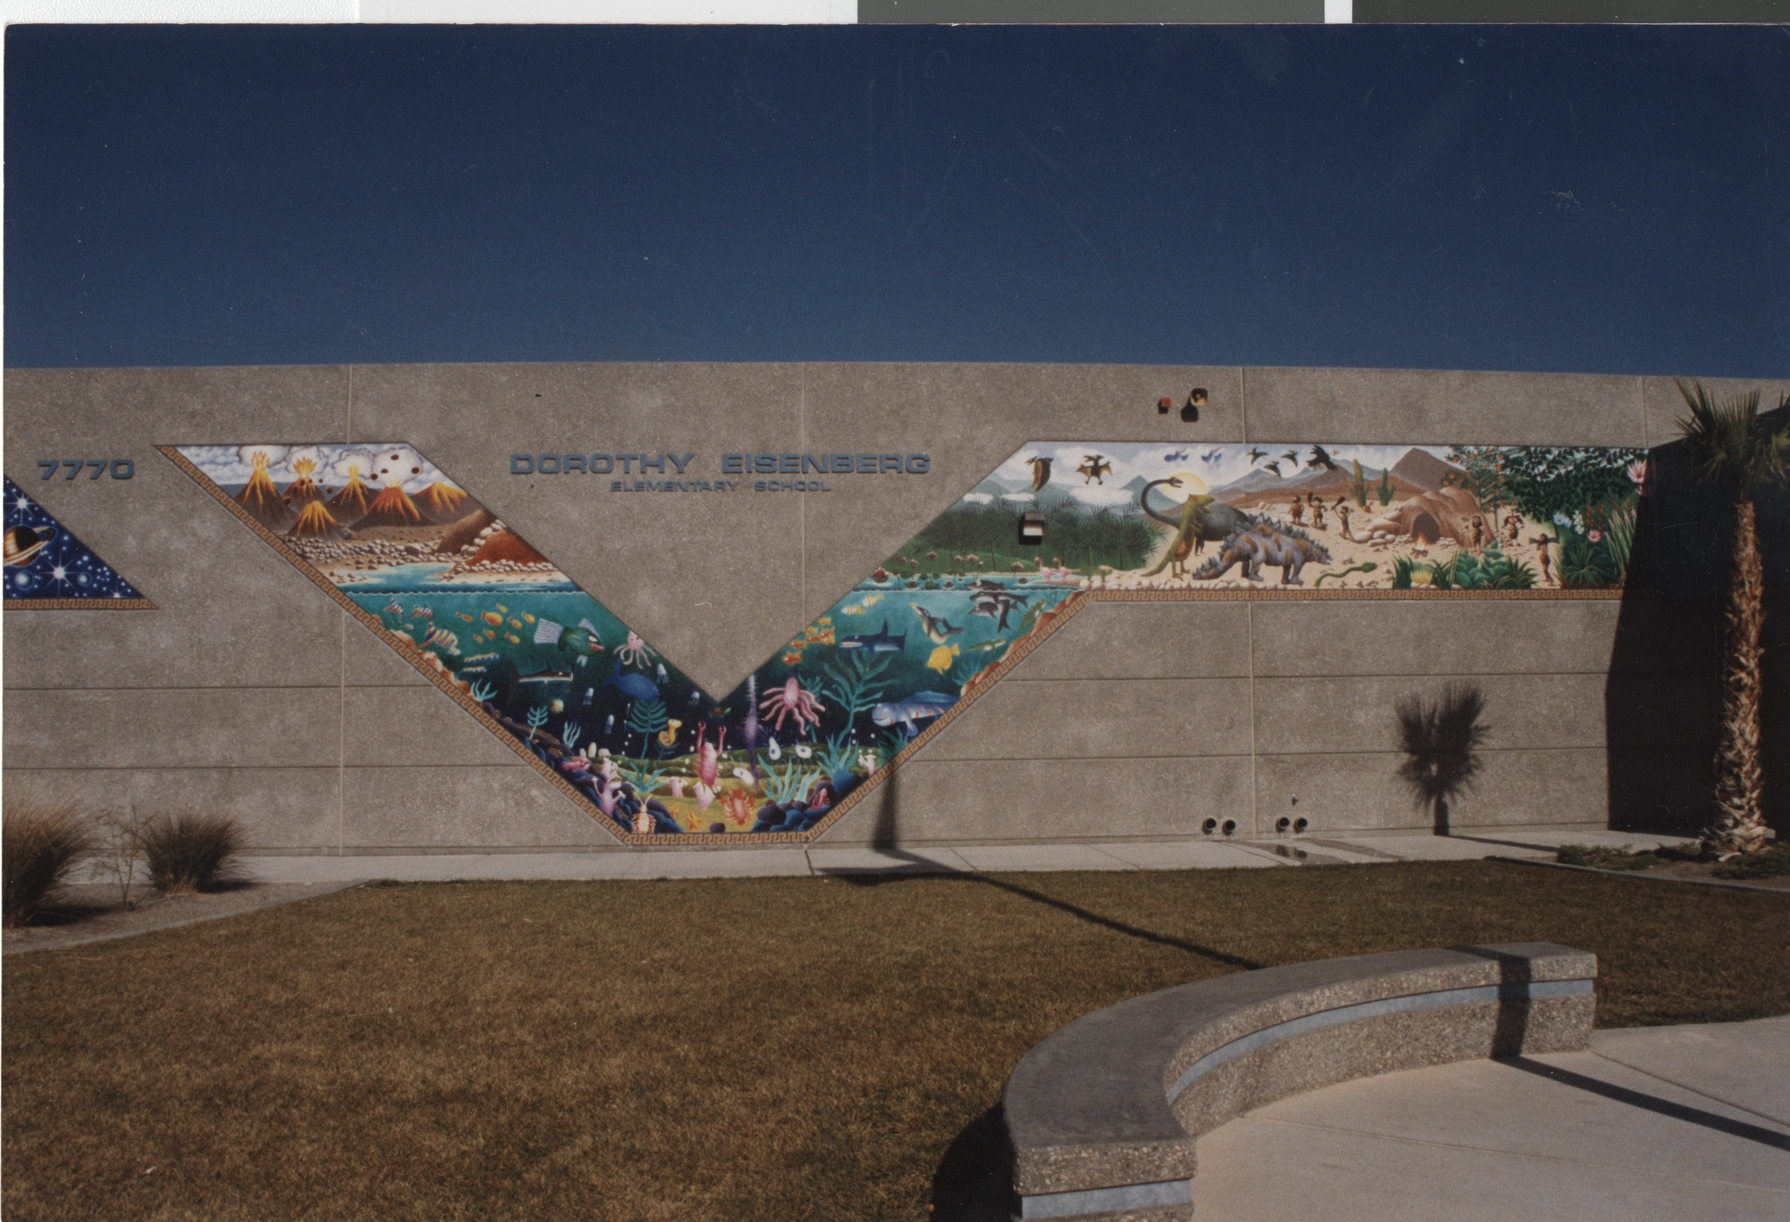 Photograph of facade of the Dorothy Eisenberg Elementary School